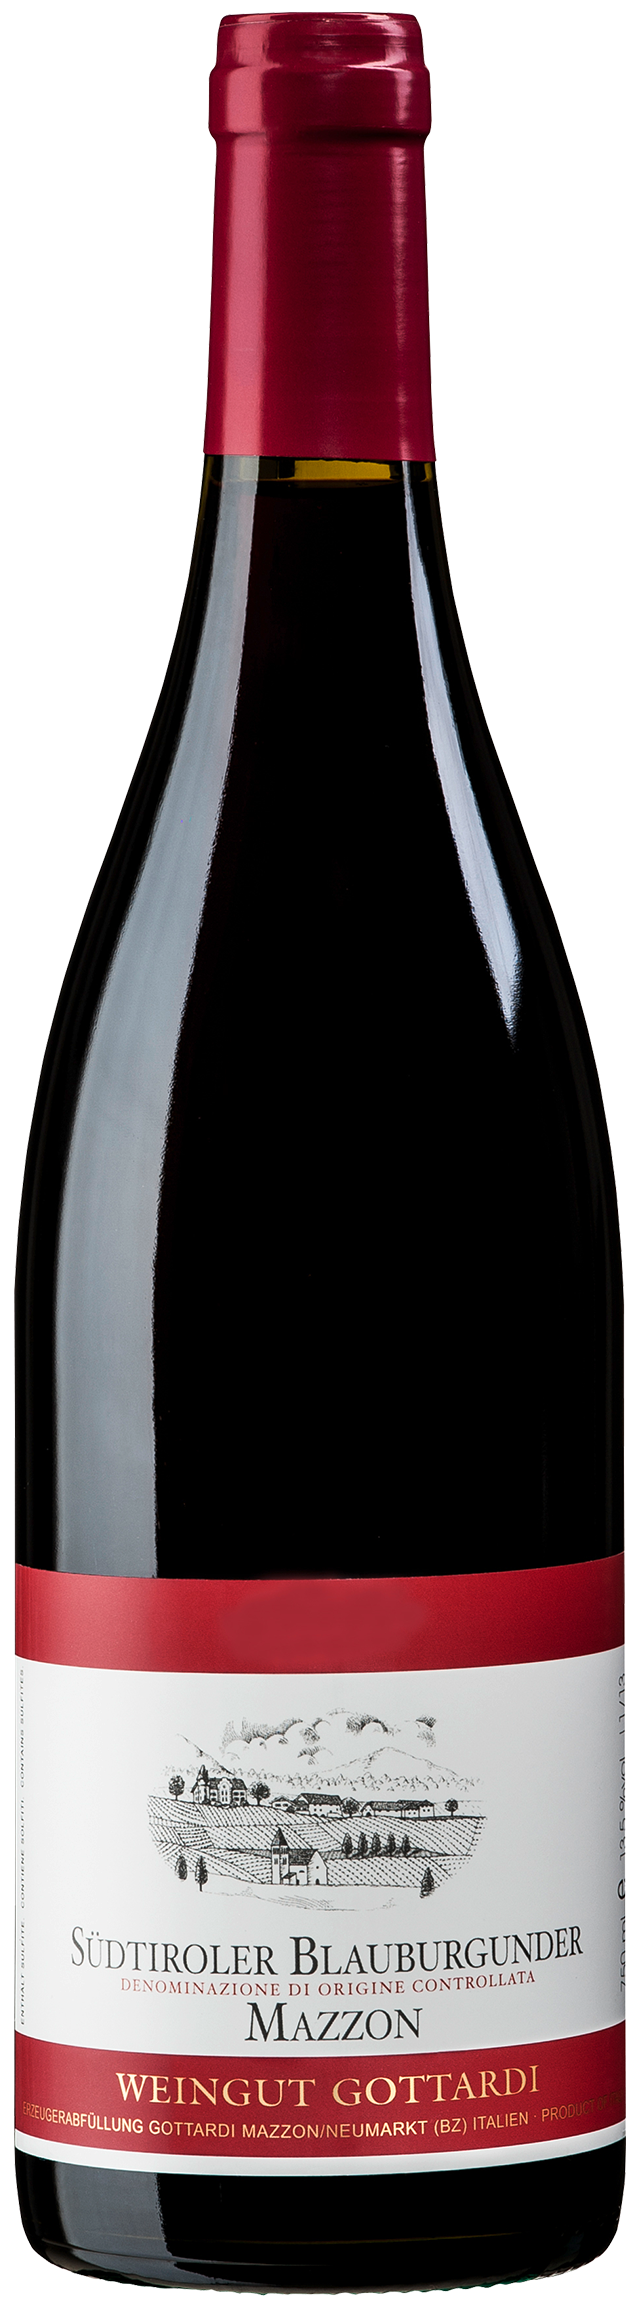 Pinot Nero Alto Adige 2018 - Weingut Gottardi Mazzon